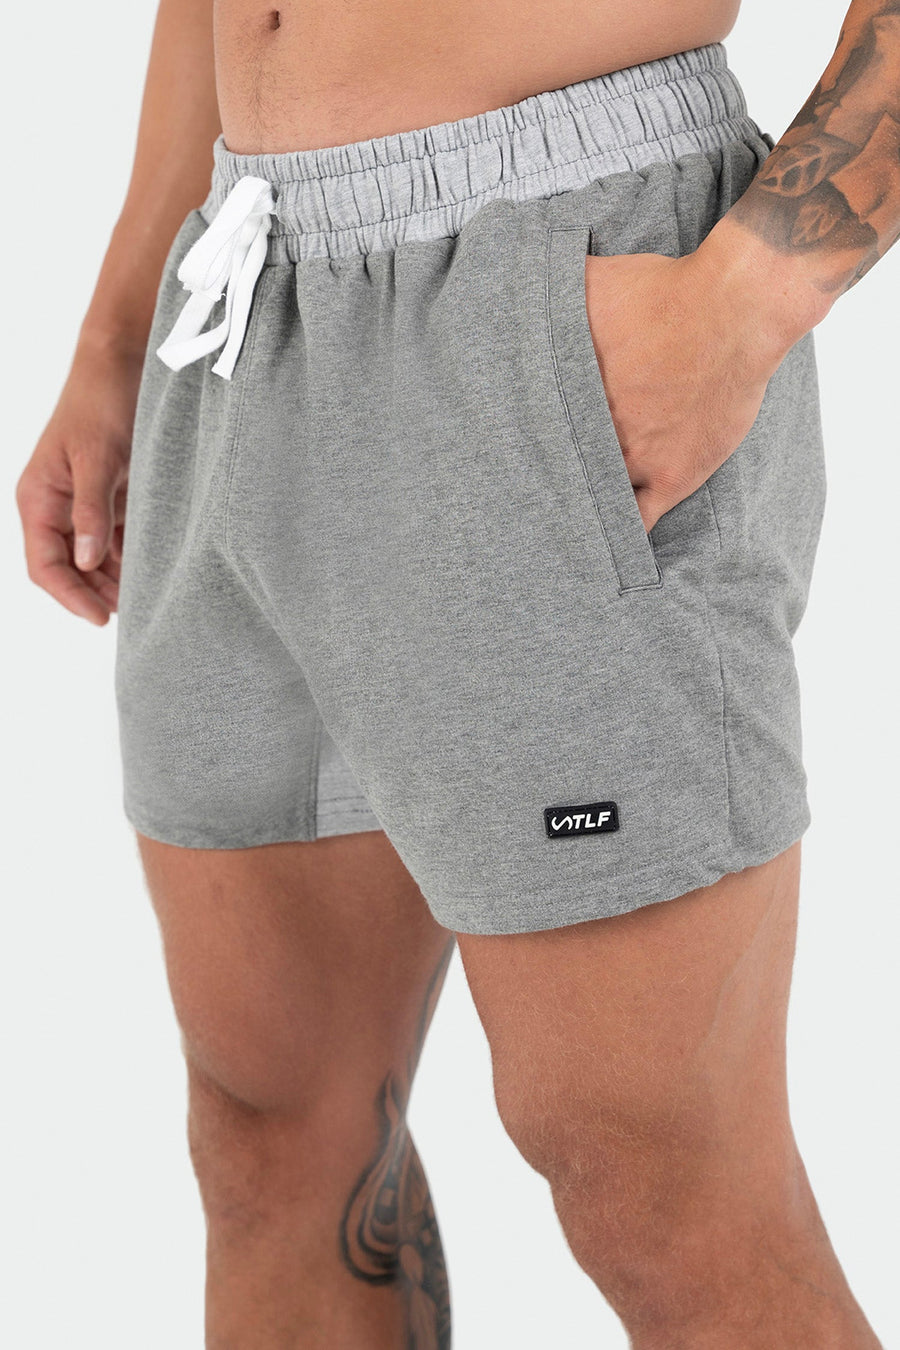 TLF Varsity 5” Shorts - 5 Inseam Shorts For Men - Gray - 2